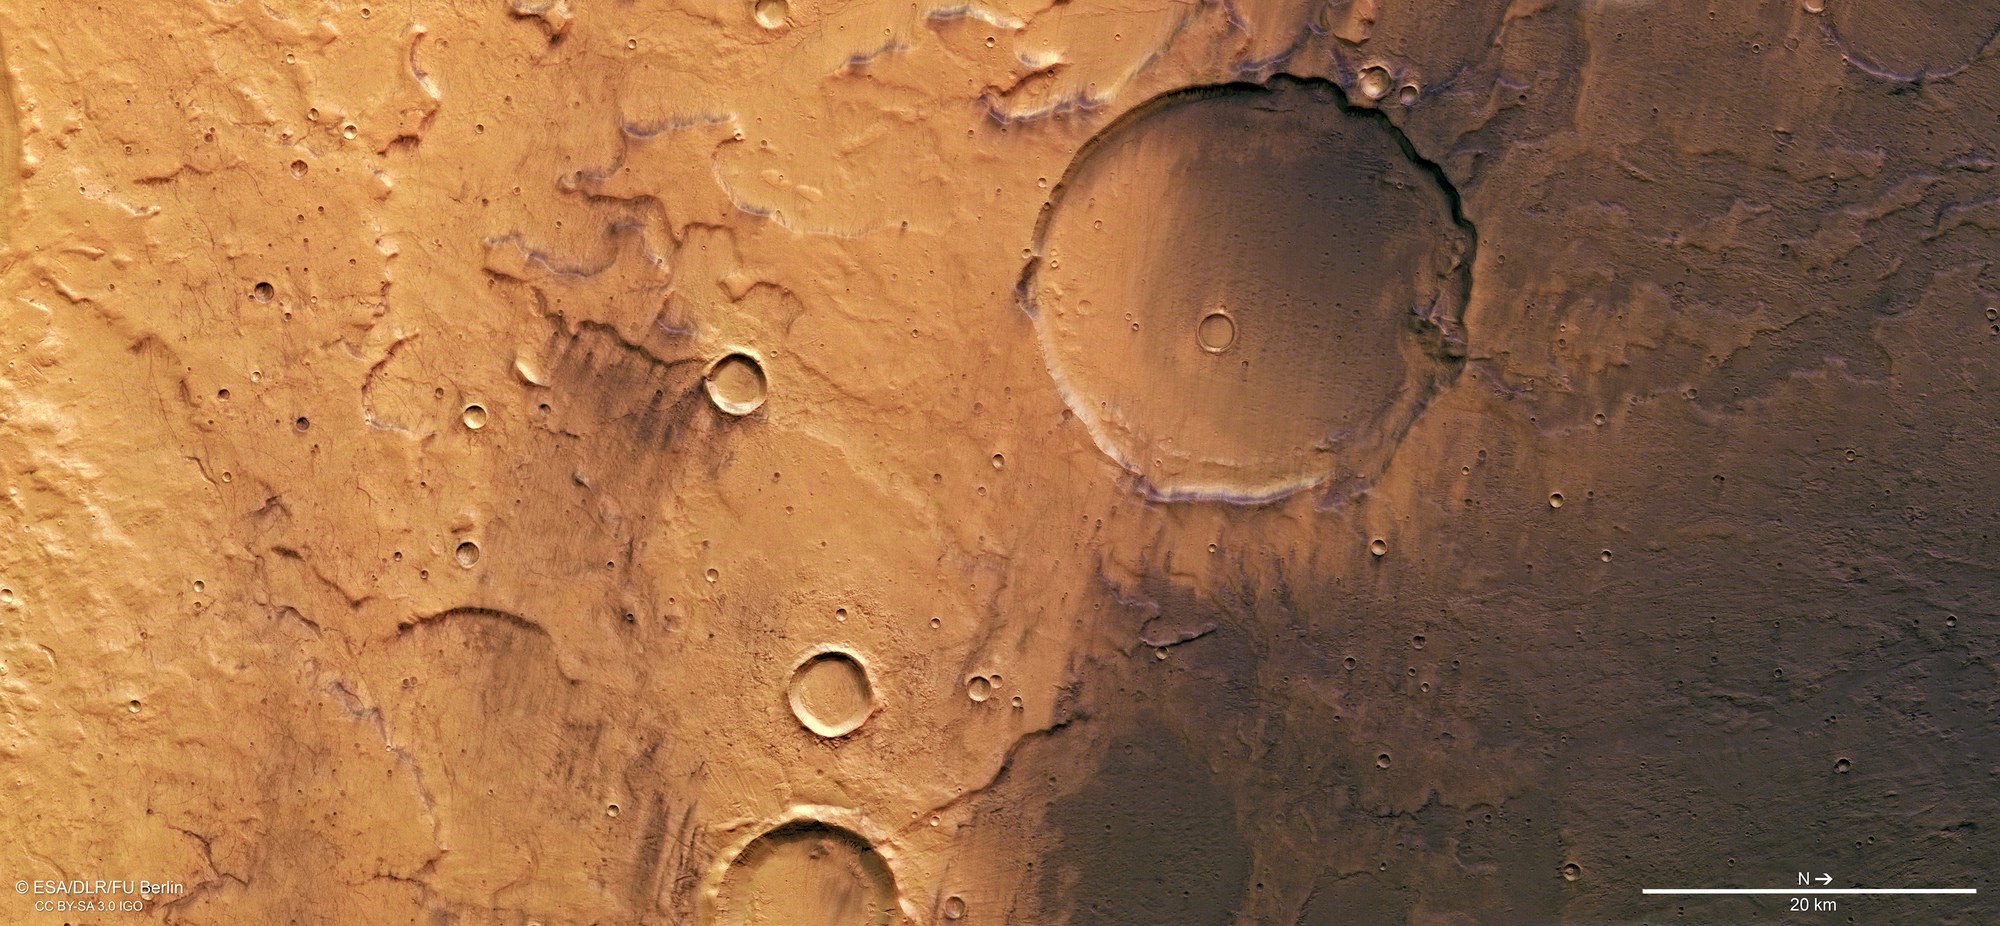 Light and dark coloured crater landscape in Terra Cimmeria